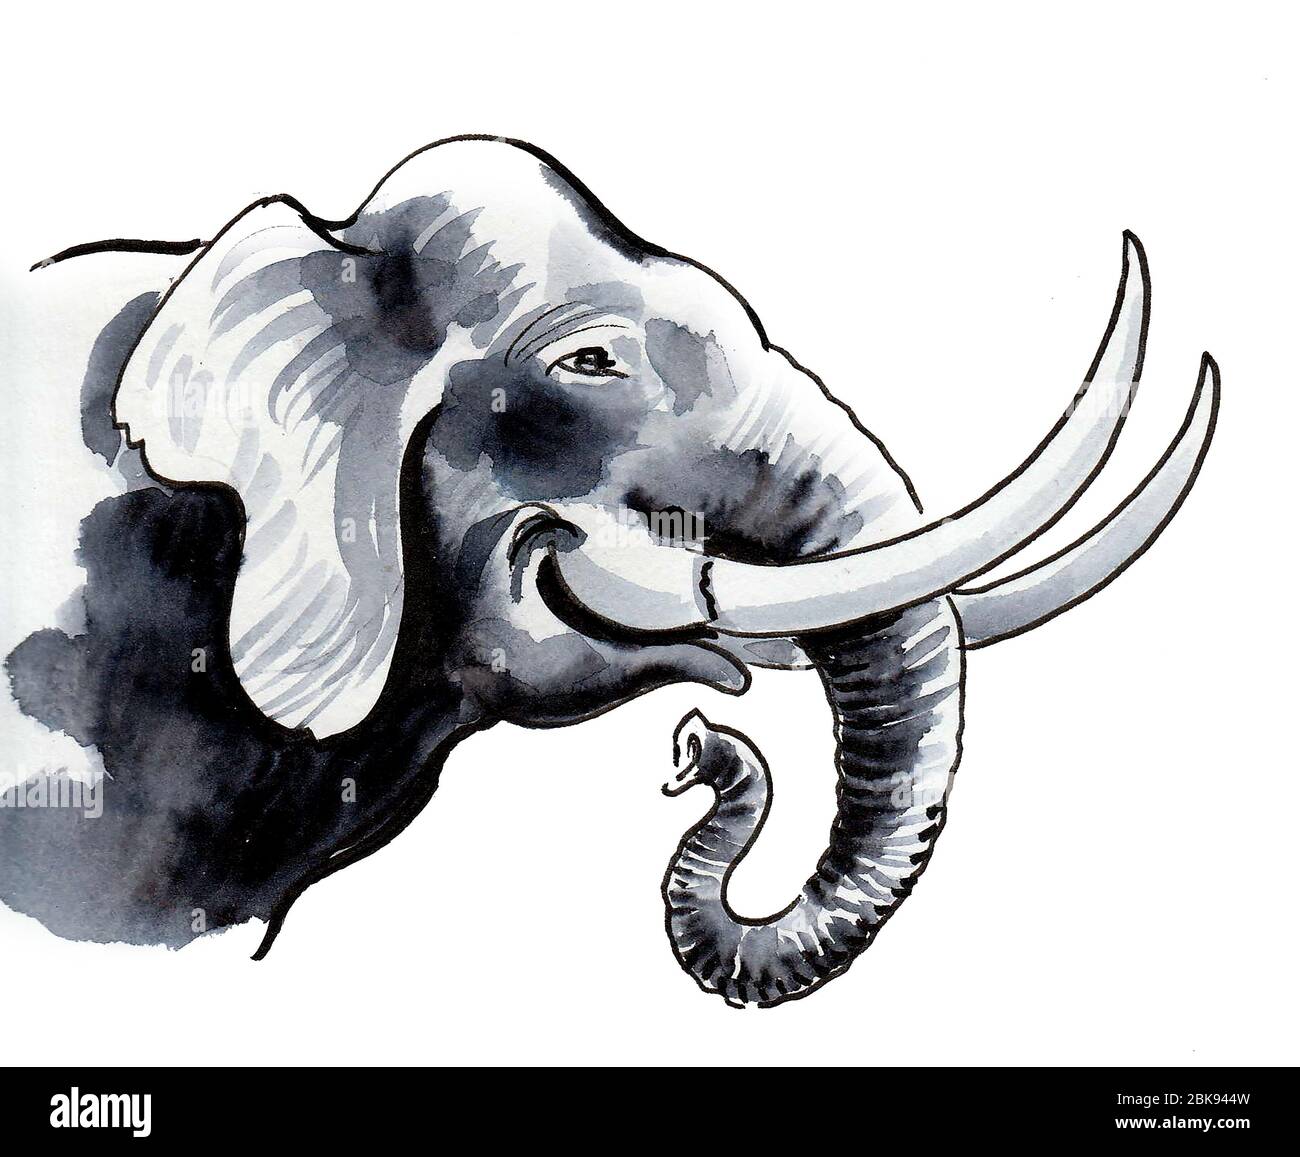 african elephant head outline